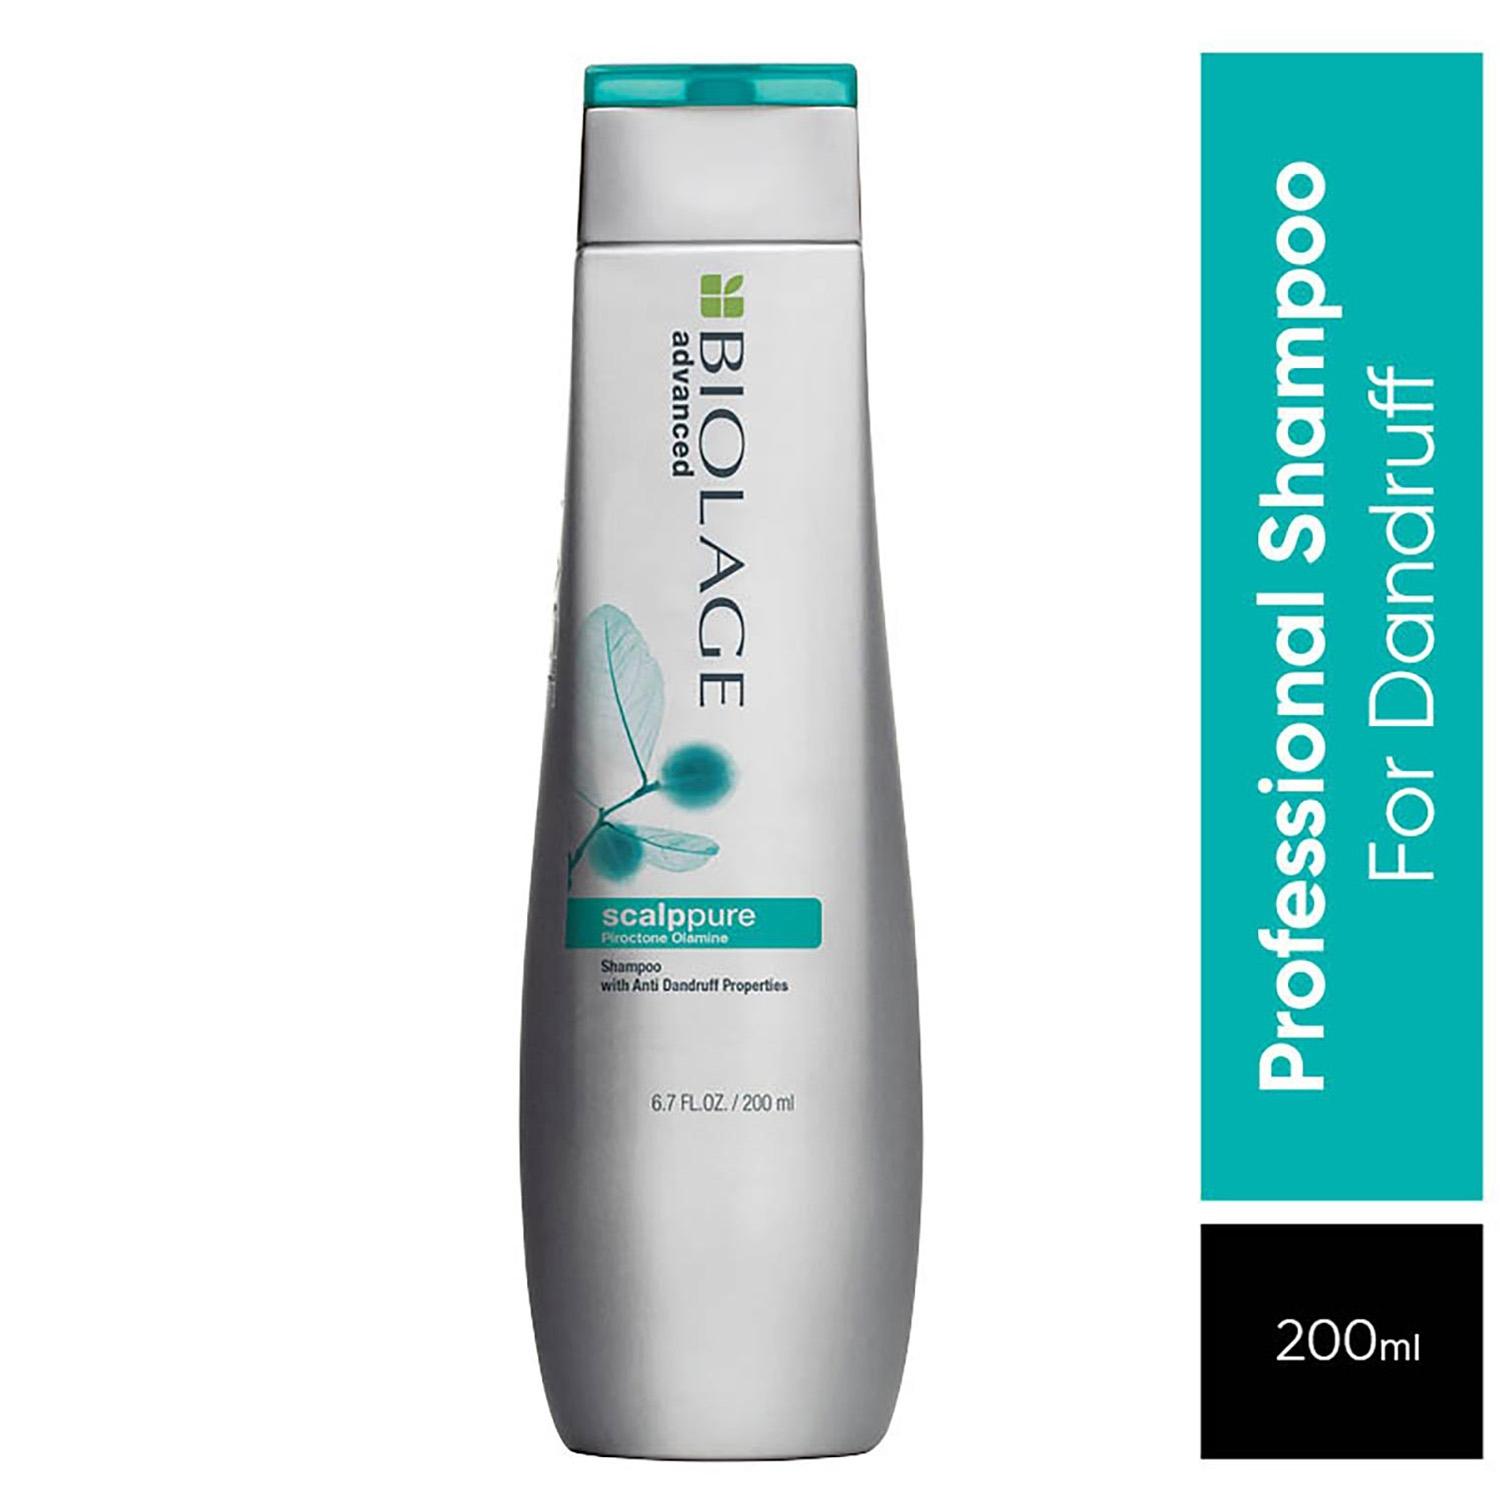 Biolage | Biolage Scalppure Shampoo (200ml)